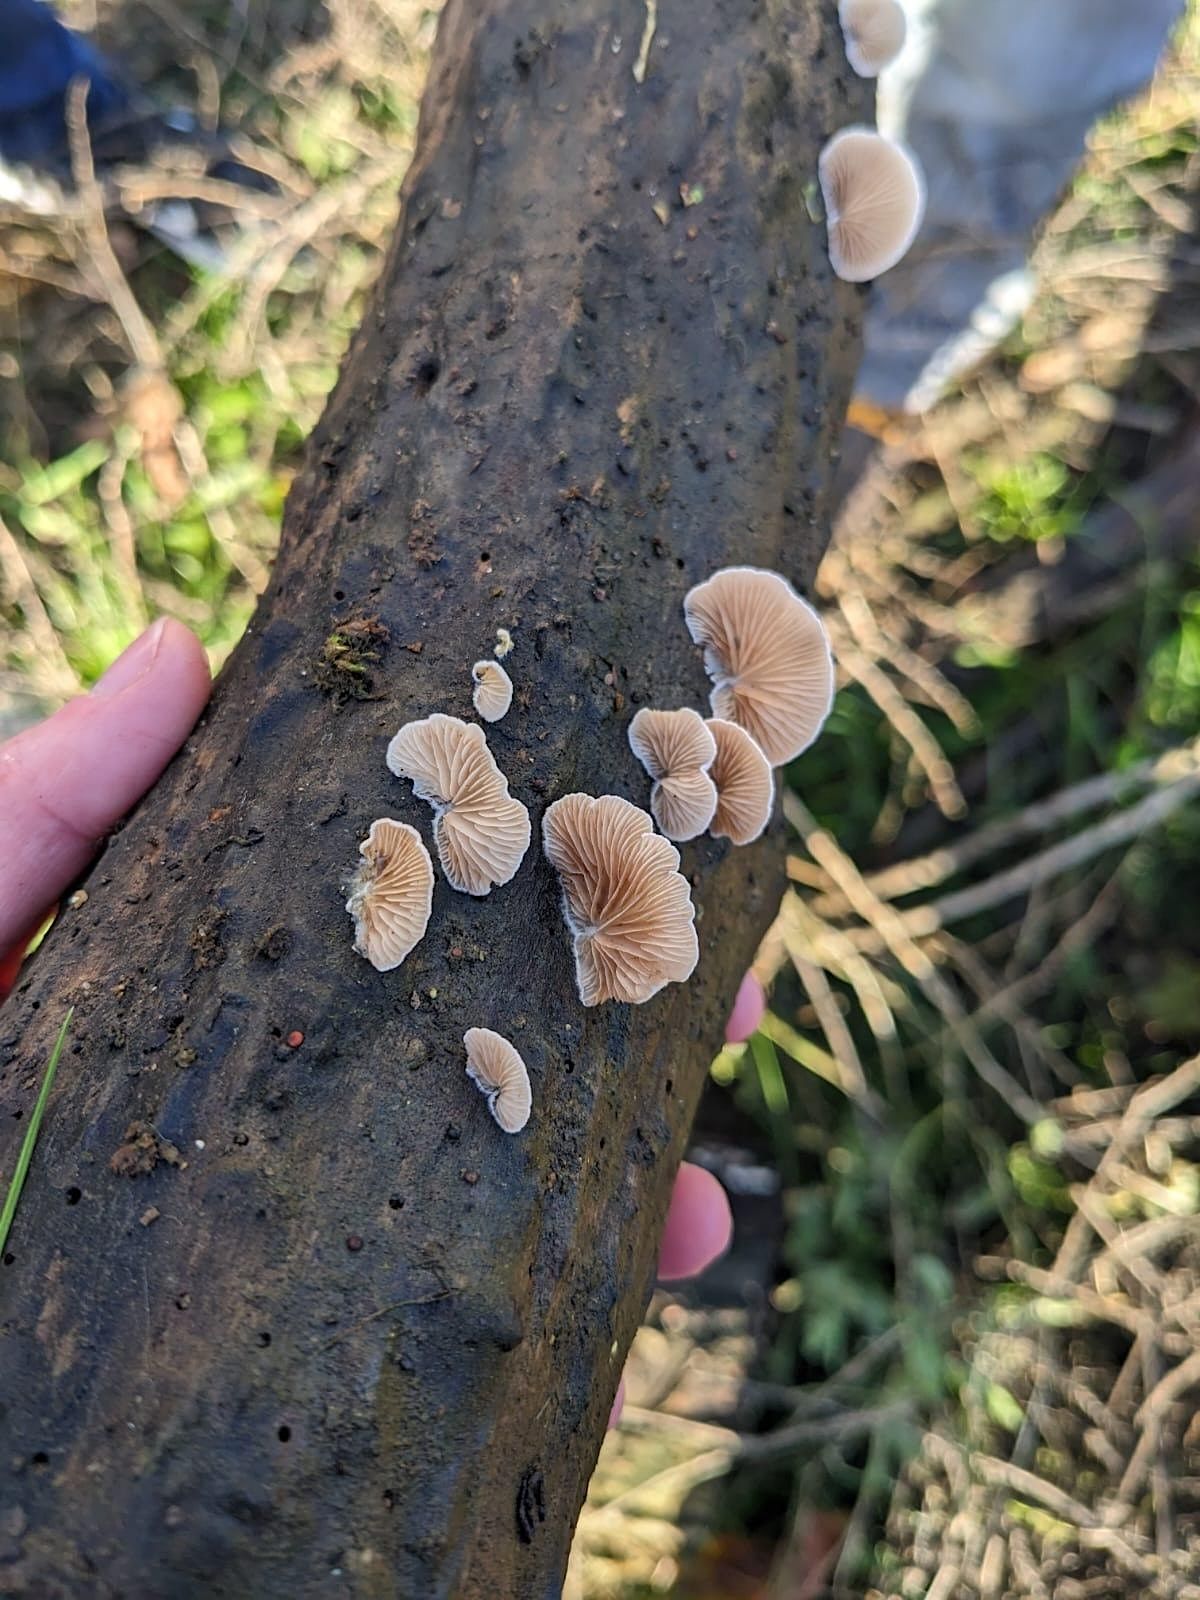 Fantastic Fungi Saturday Walk